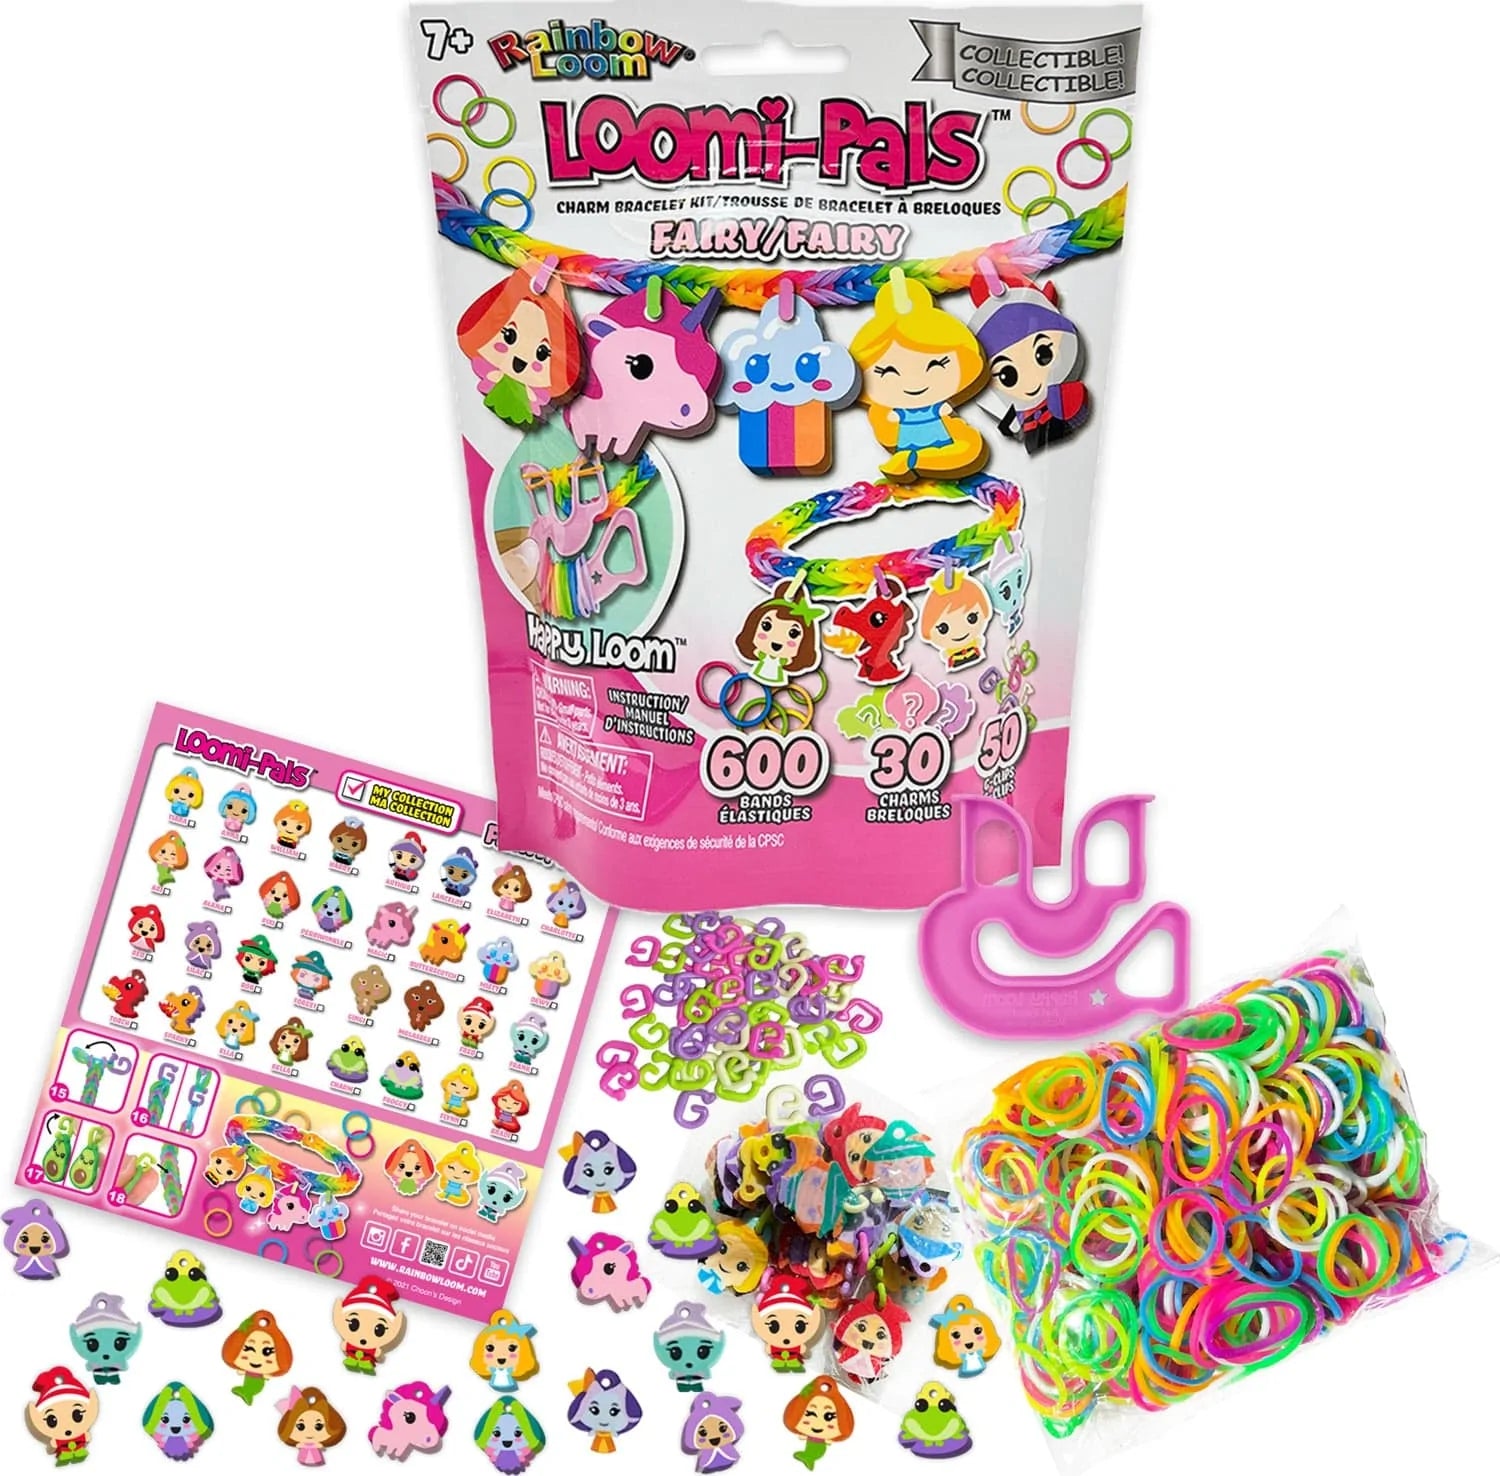 Loomi-Pals Collectible Charm Bracelet Kit - Fairy - Saltire Games